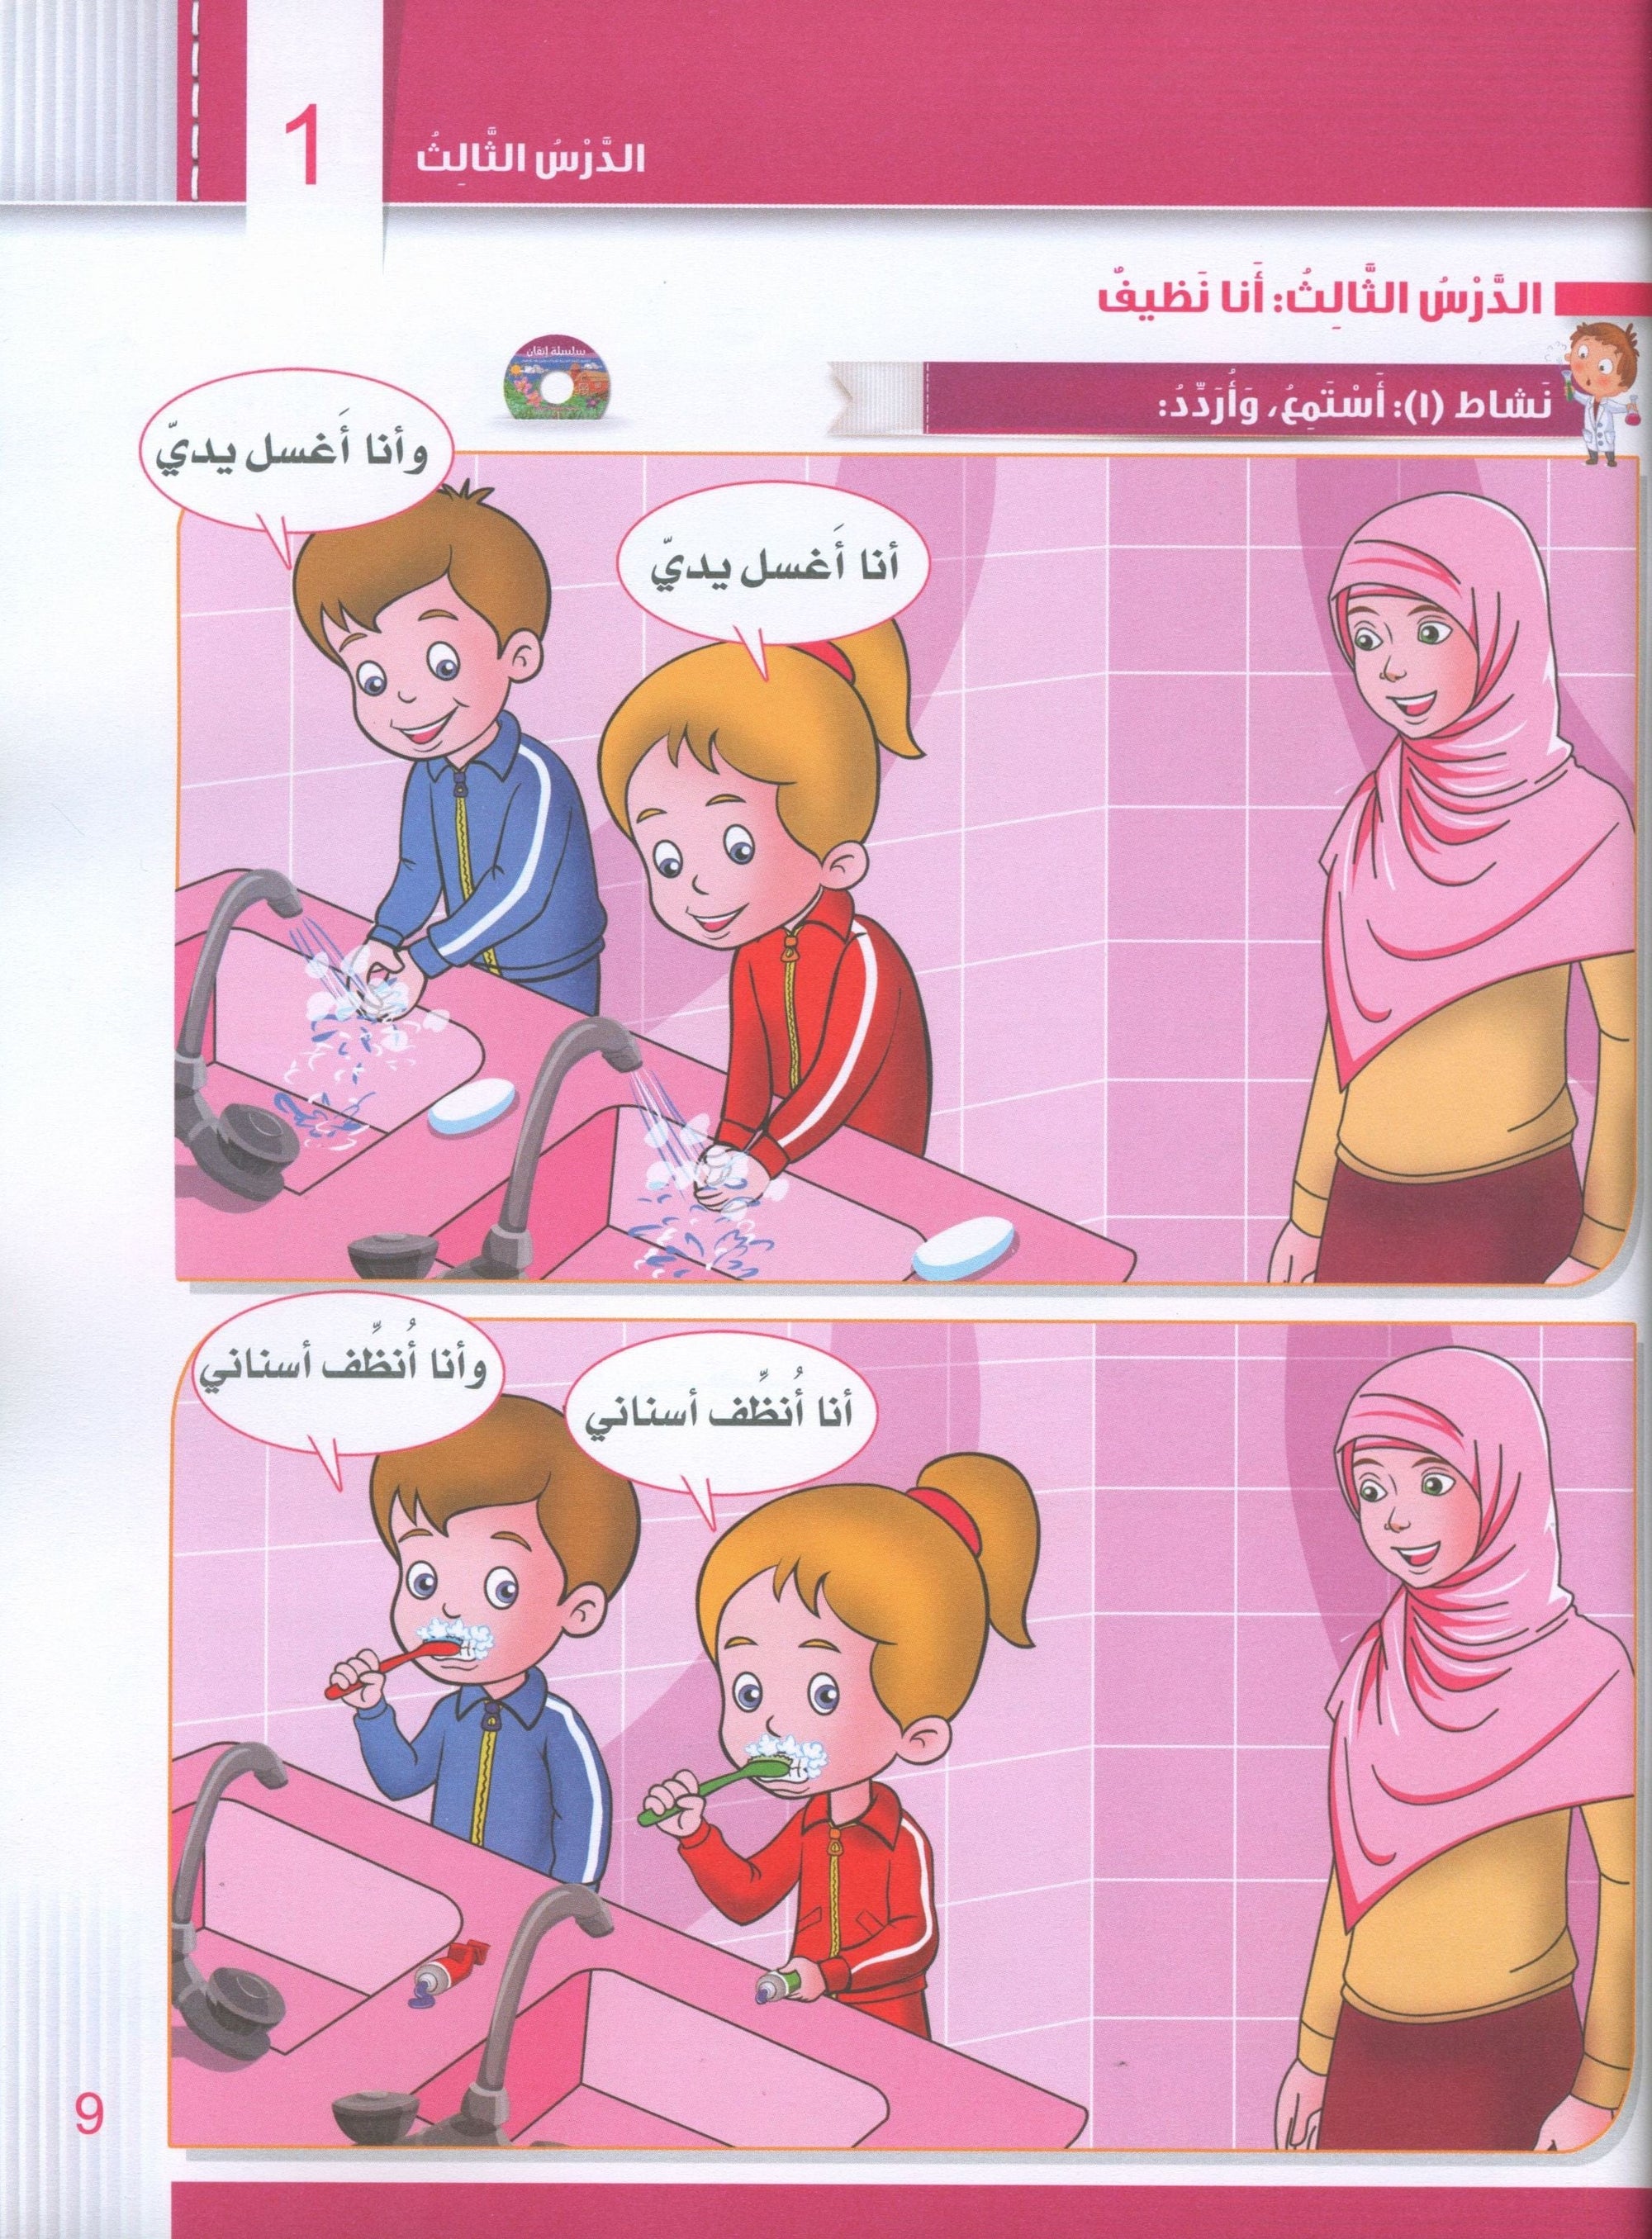 Itqan Series for Teaching Arabic Textbook (with Audio CD): KG1 سلسلة إتقان لتعليم اللغة العربية كتاب الطالب